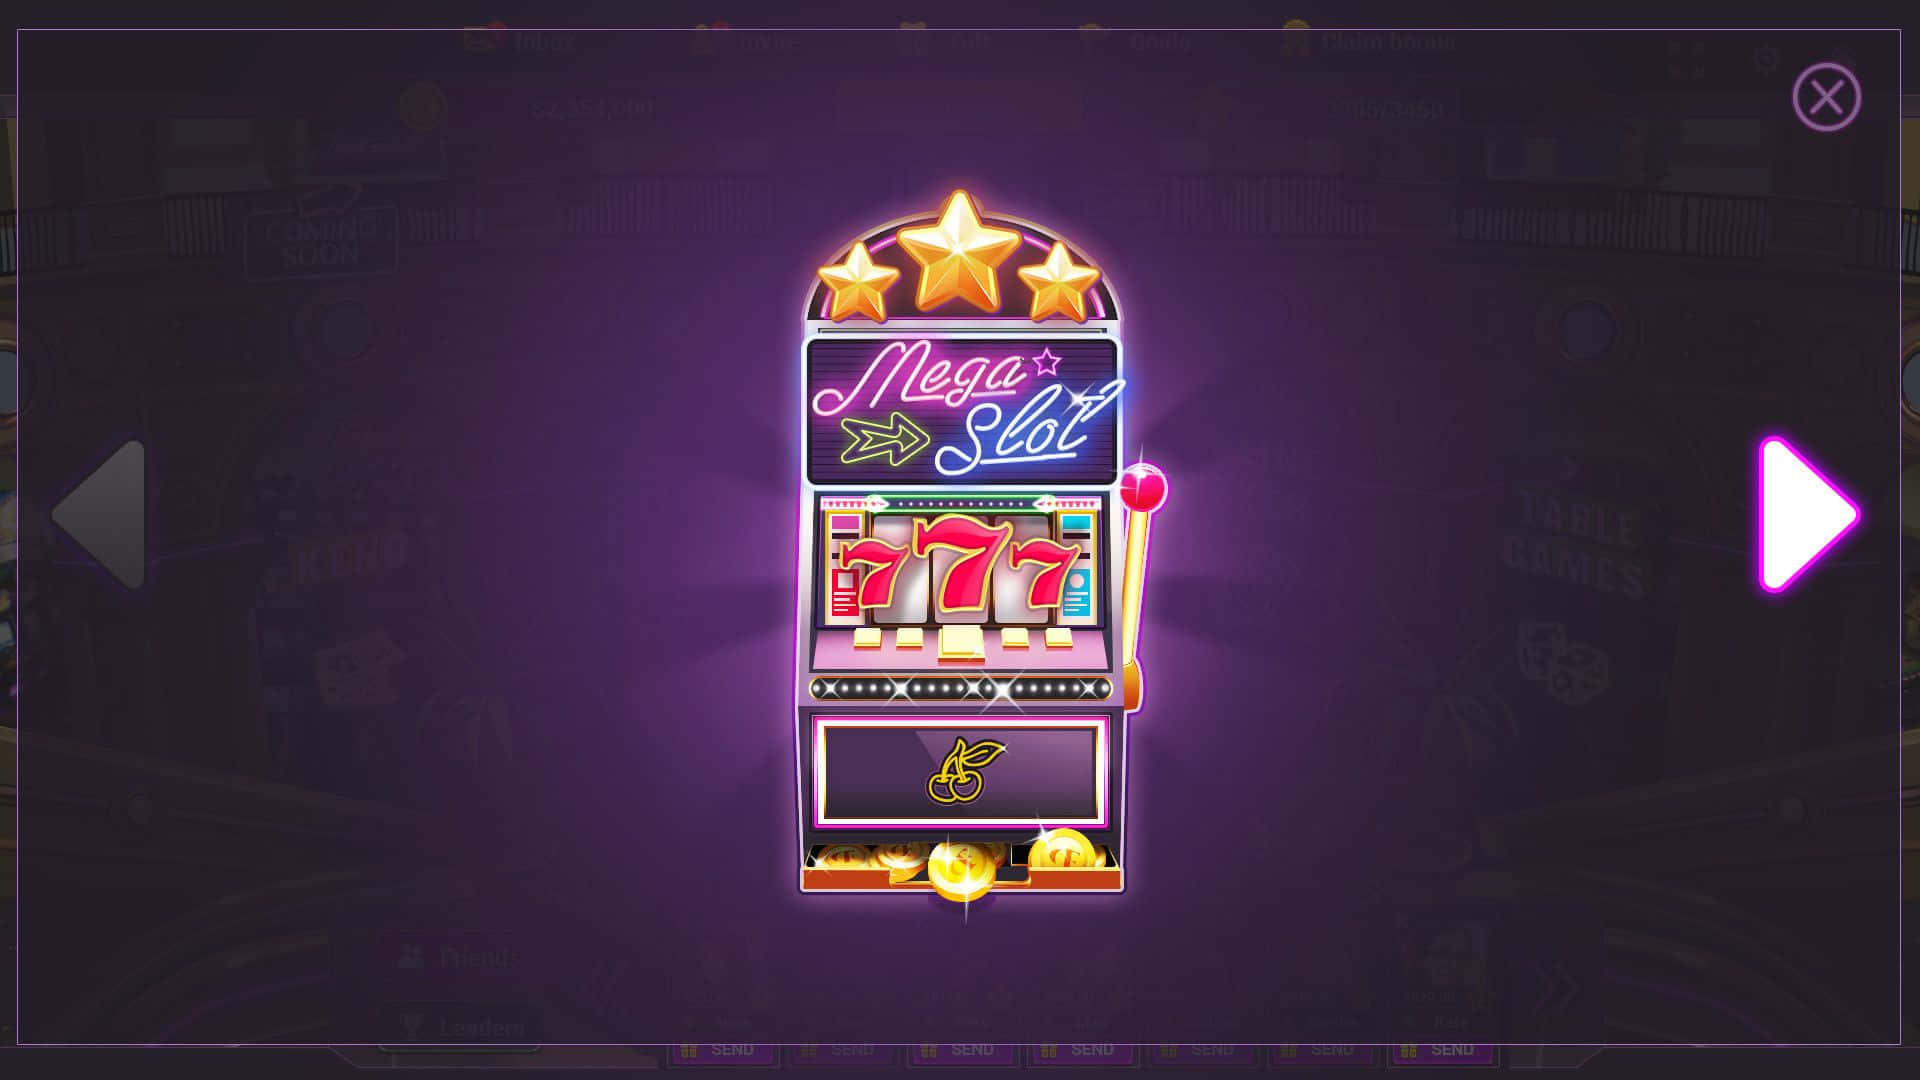 "Play the Slot Machine and Win Big!"